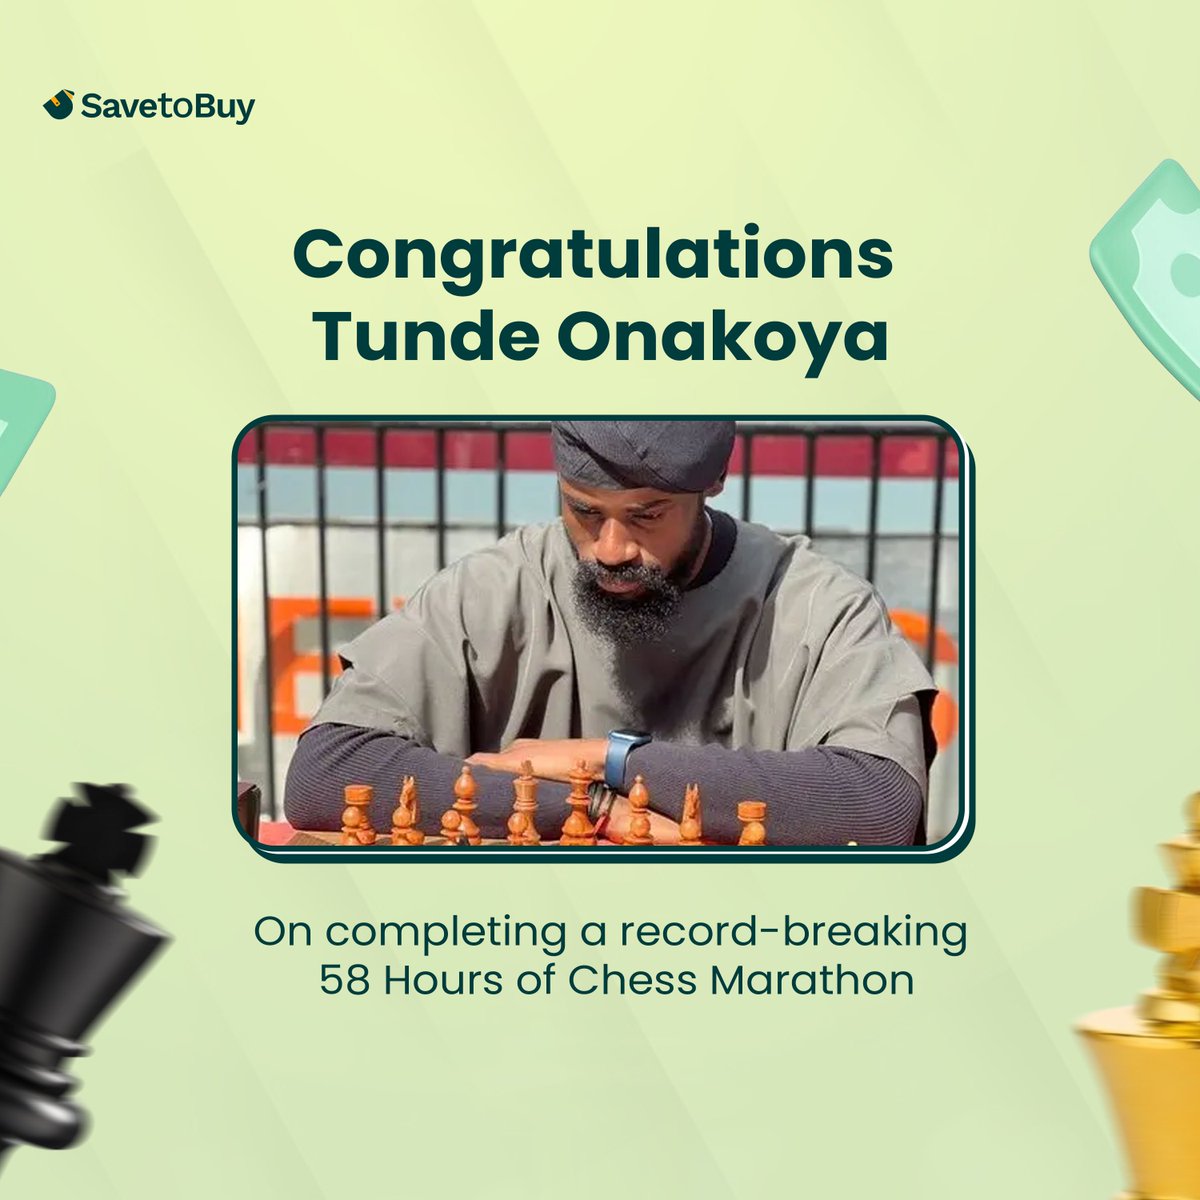 SavetoBuy salutes chess champion Tunde Onakoya for his incredible 58-hour marathon feat!

#LongestChessMaranthon #58HoursComplete #ChessMarathon #TundeOnakoya
#worldrecord
#savetobuy